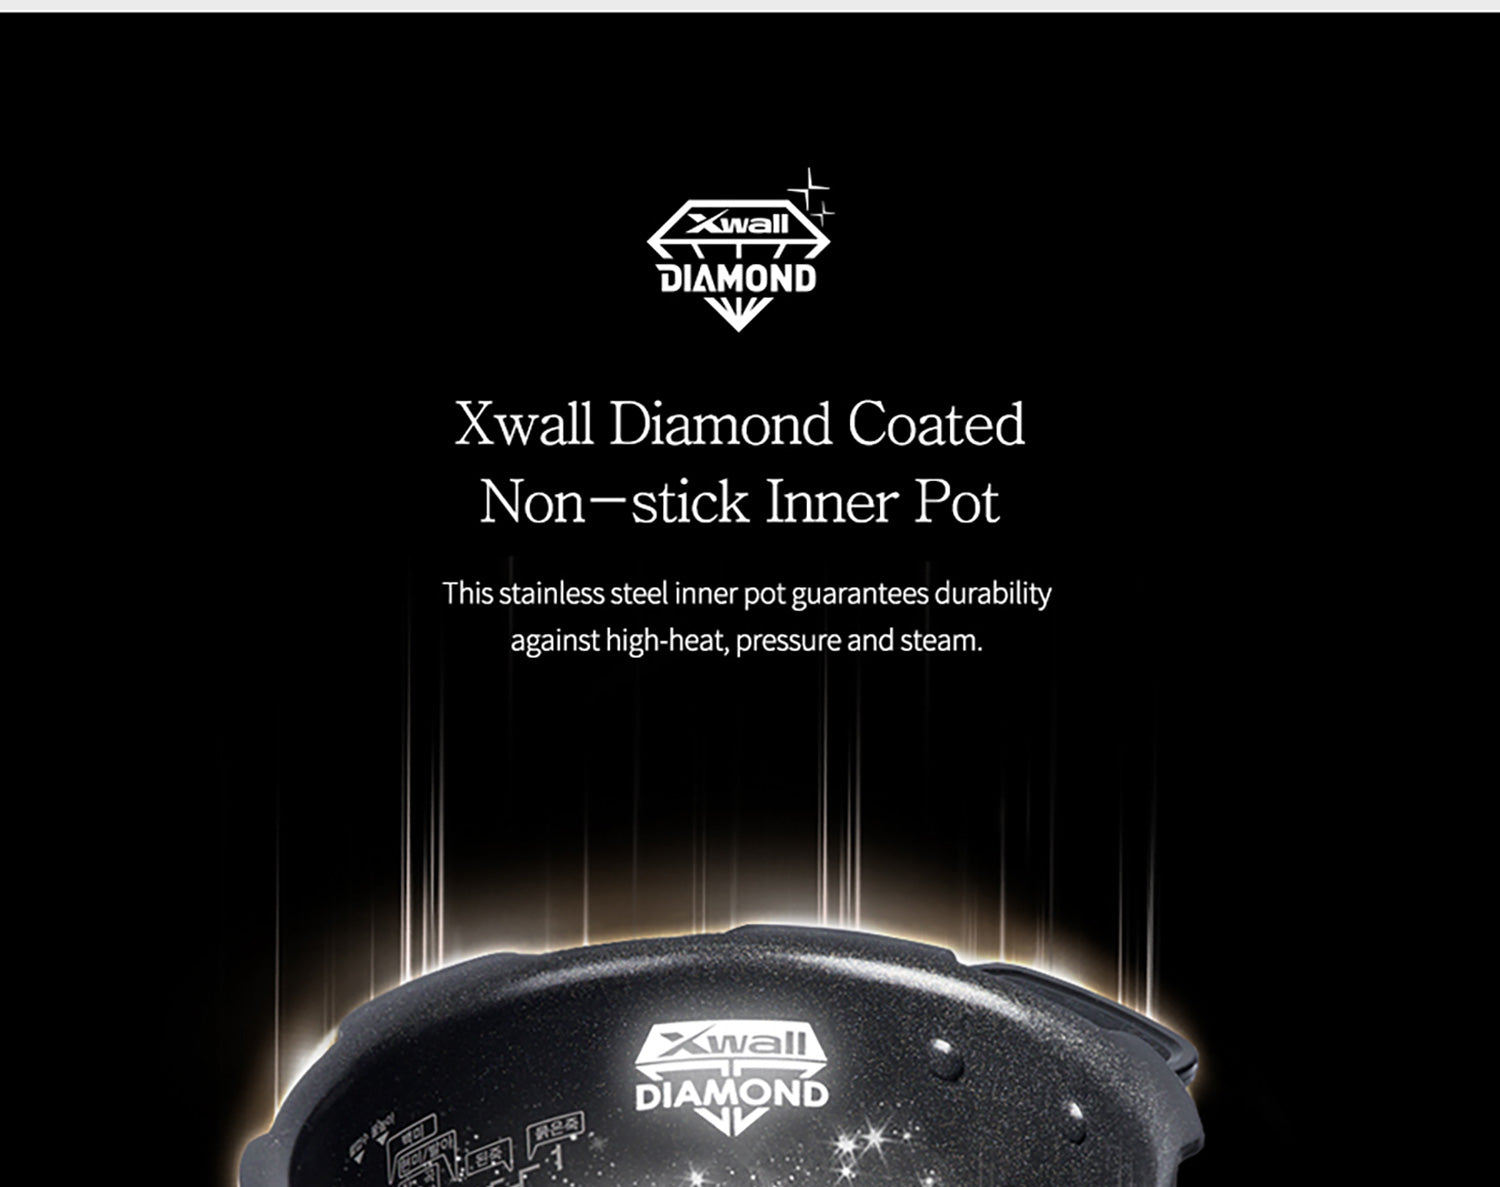 Diamond coated non-stick inner pot